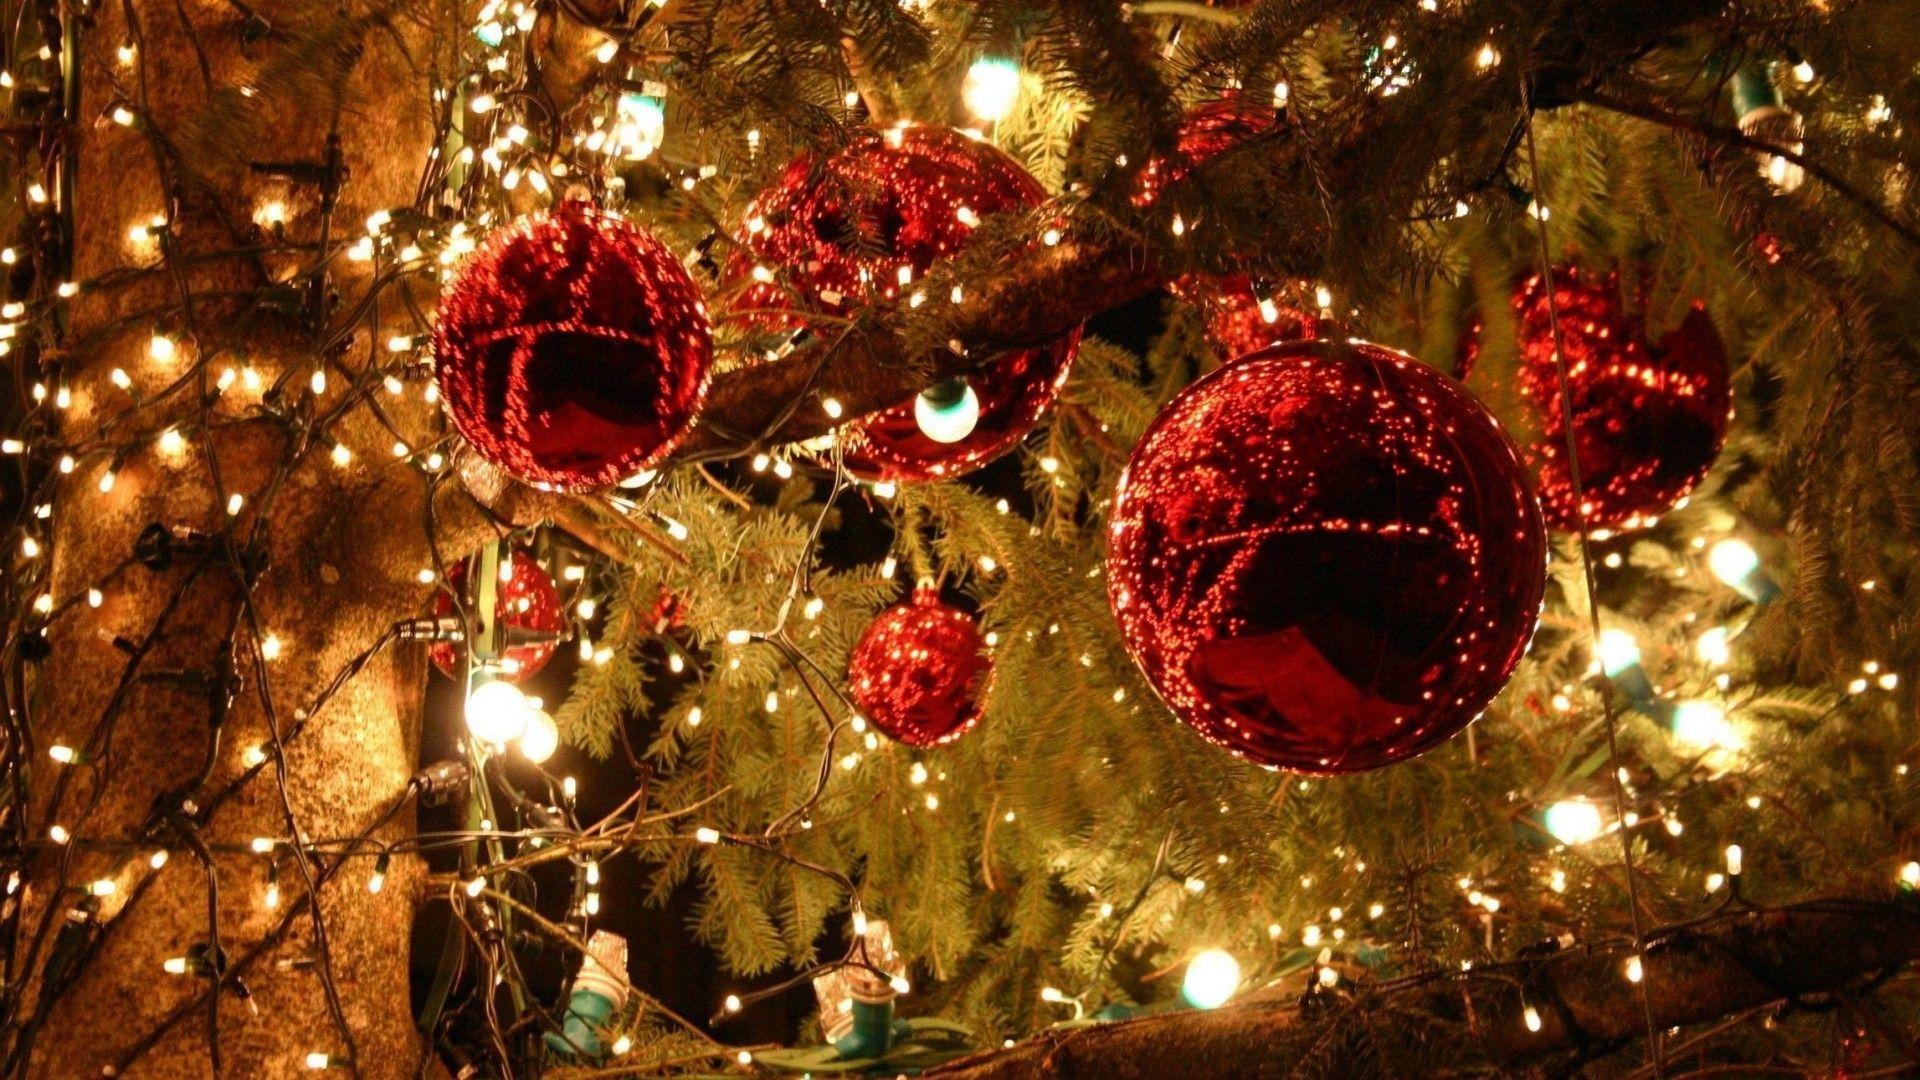 view original size. Tags: Christmas, Decoration, Tree. Christmas